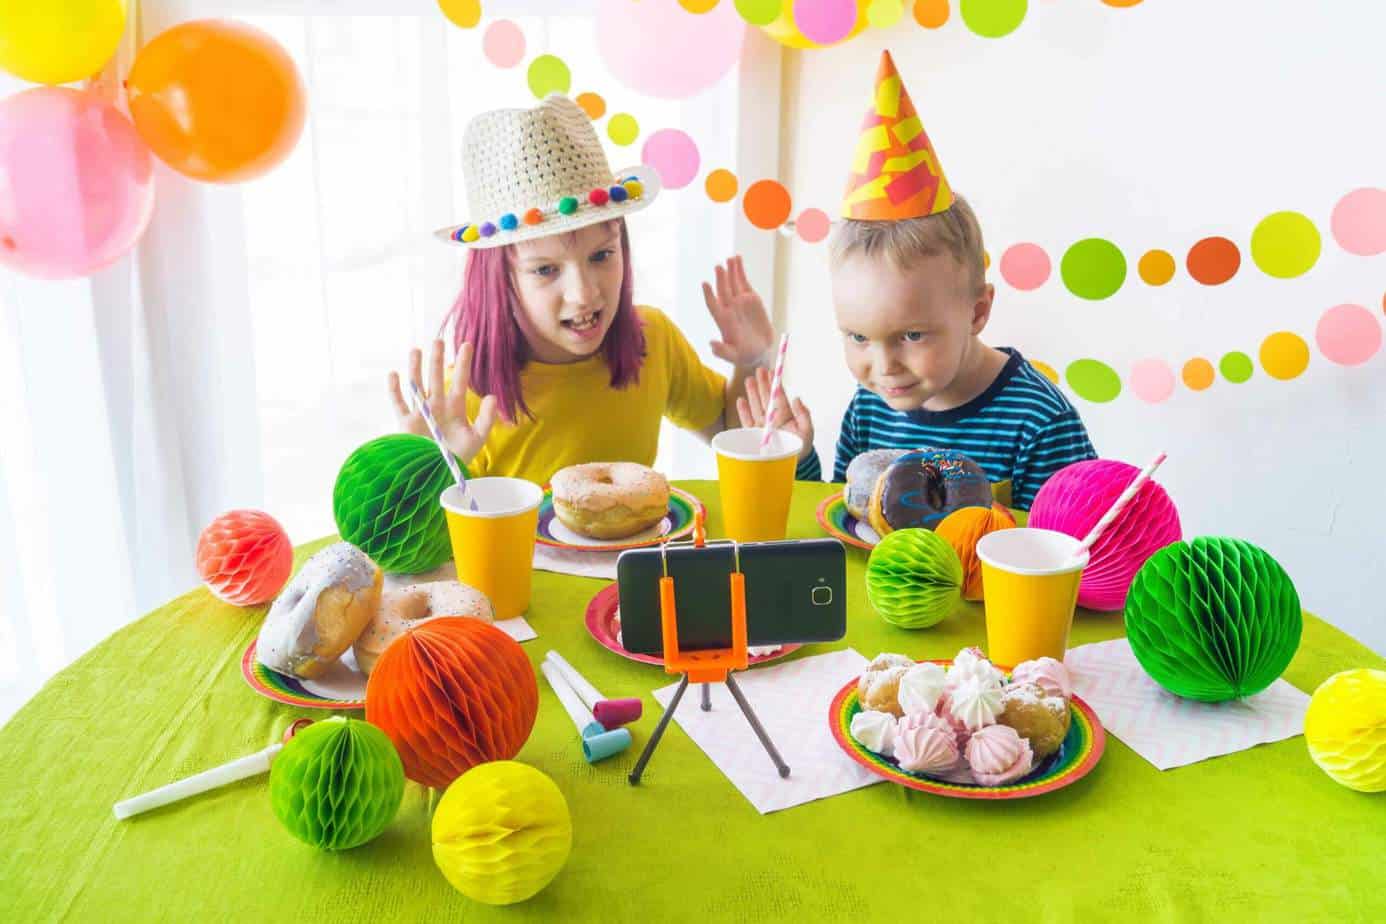 Virtual kids birthday party activities